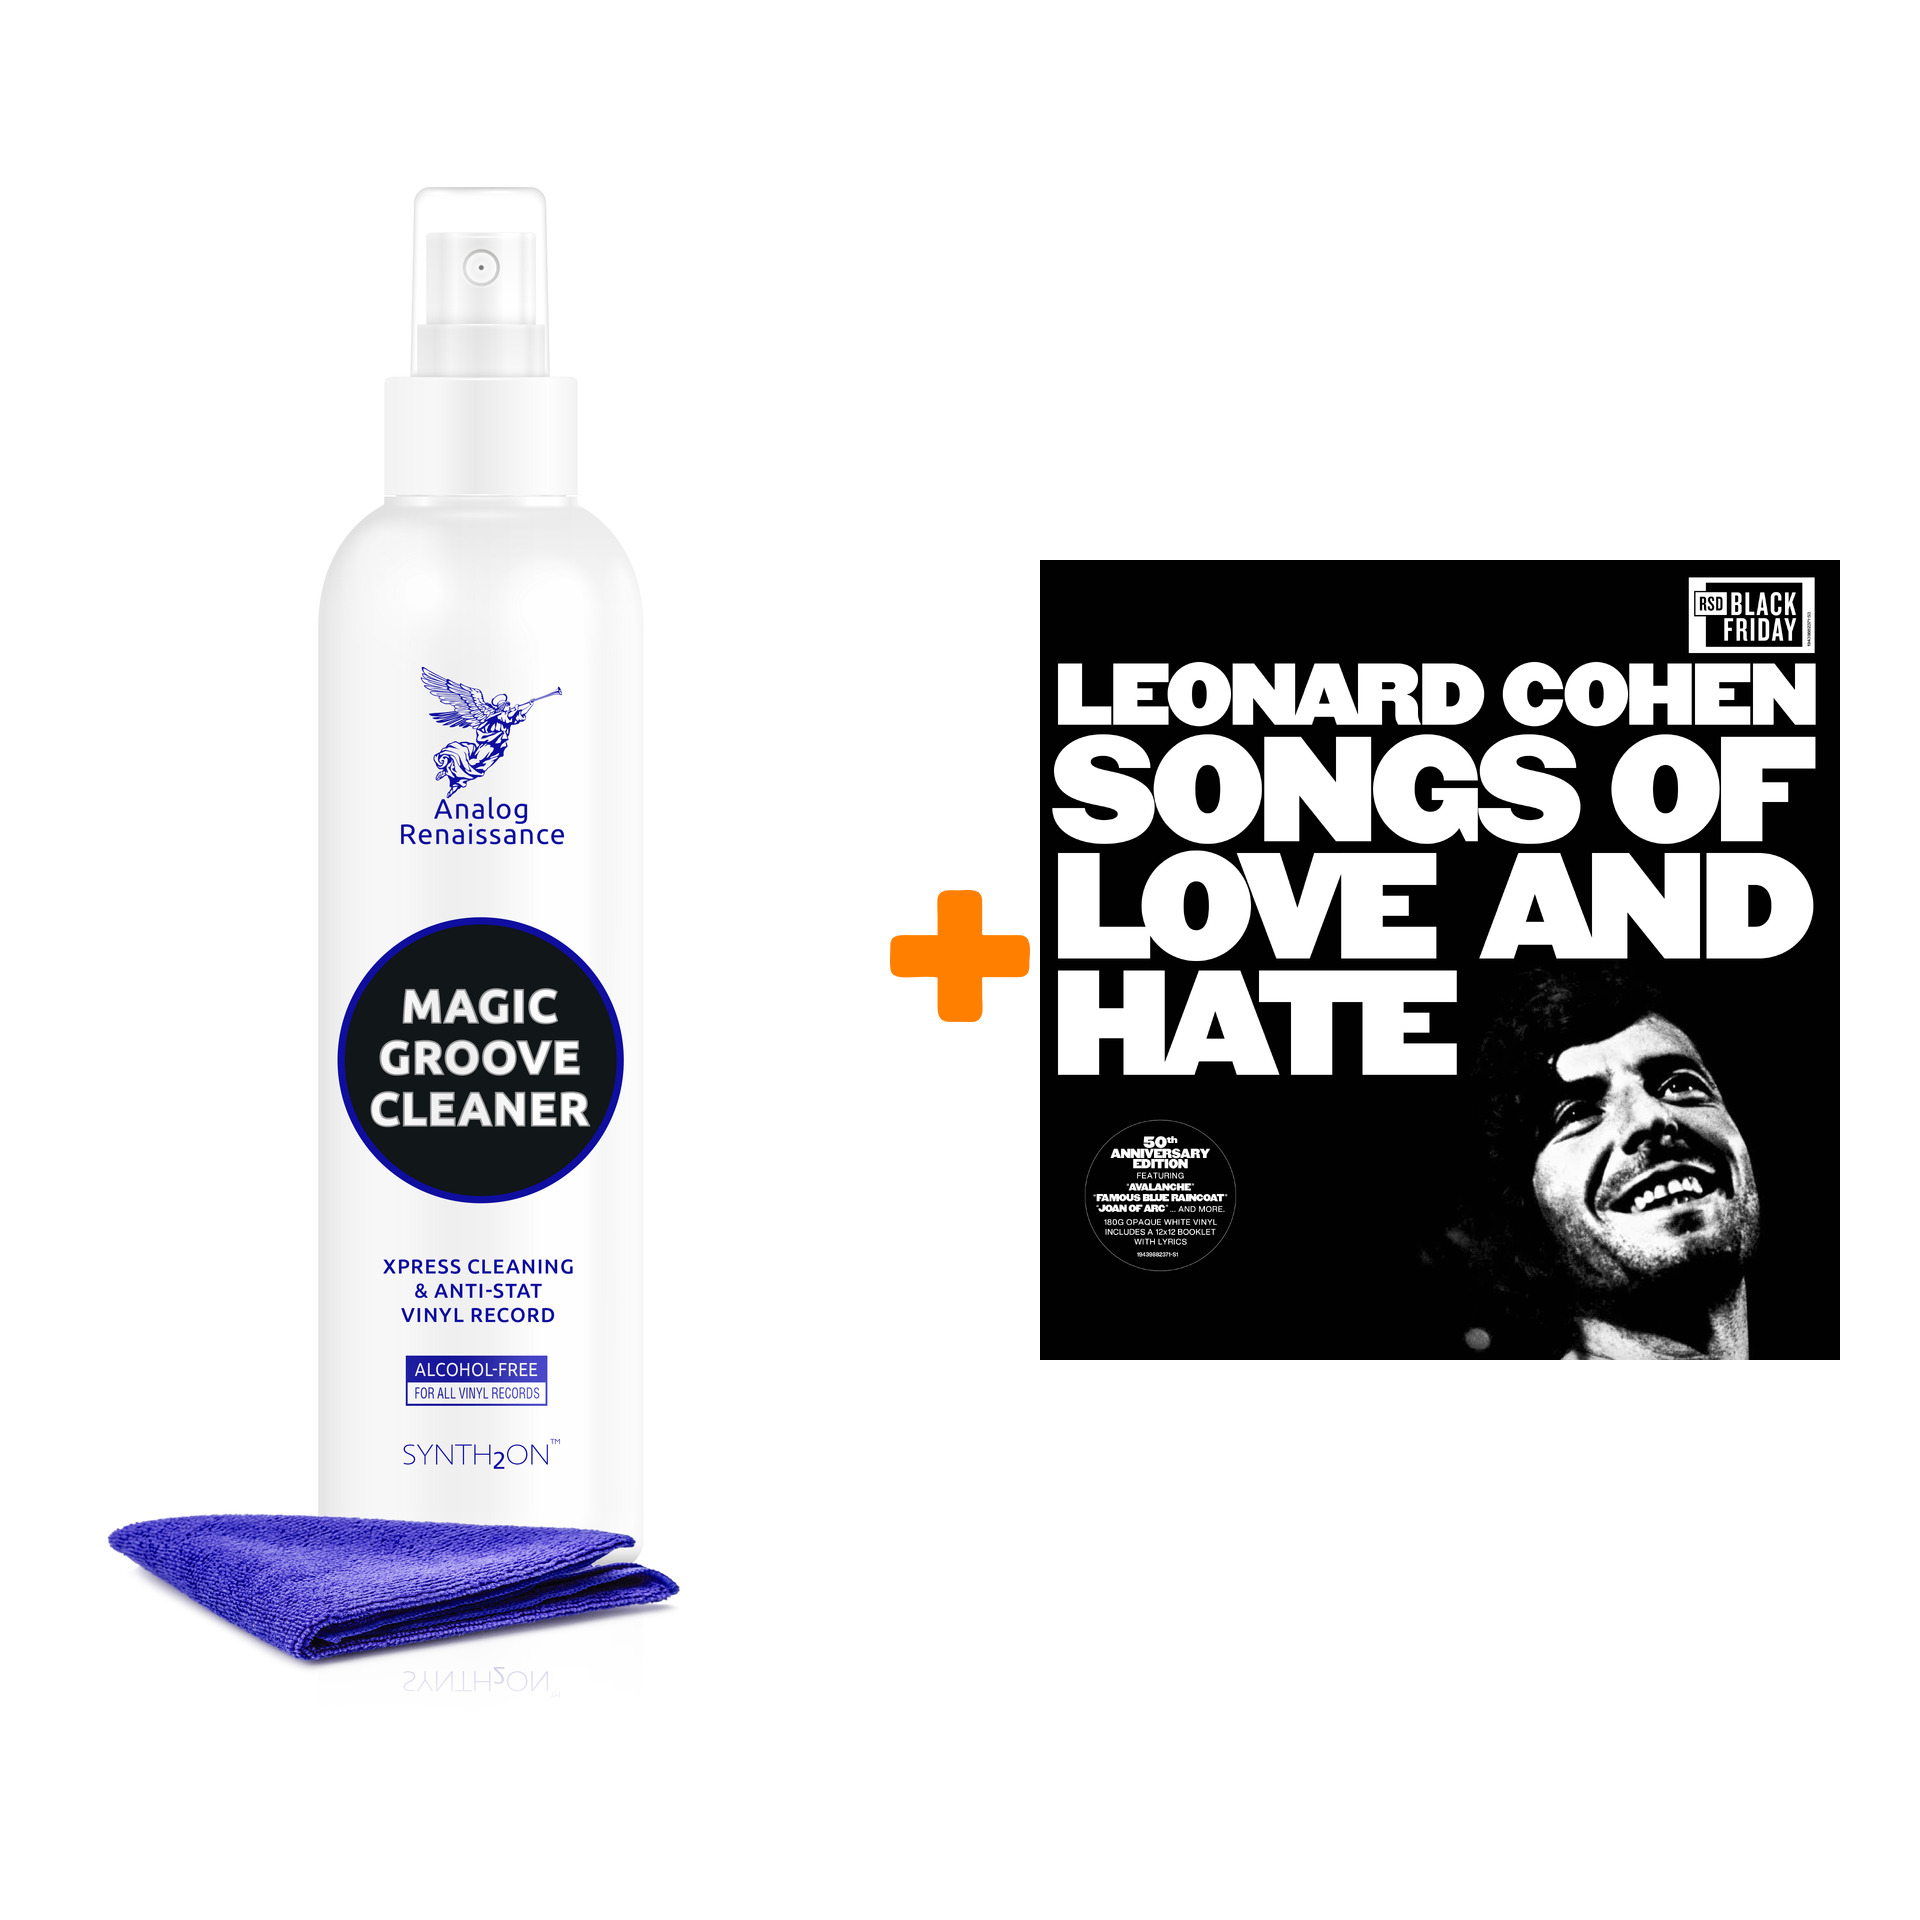 COHEN LEONARD Songs Of Love And Hate 50th Anniversary Coloured White Vinyl LP + Спрей для очистки LP с микрофиброй 250мл Набор